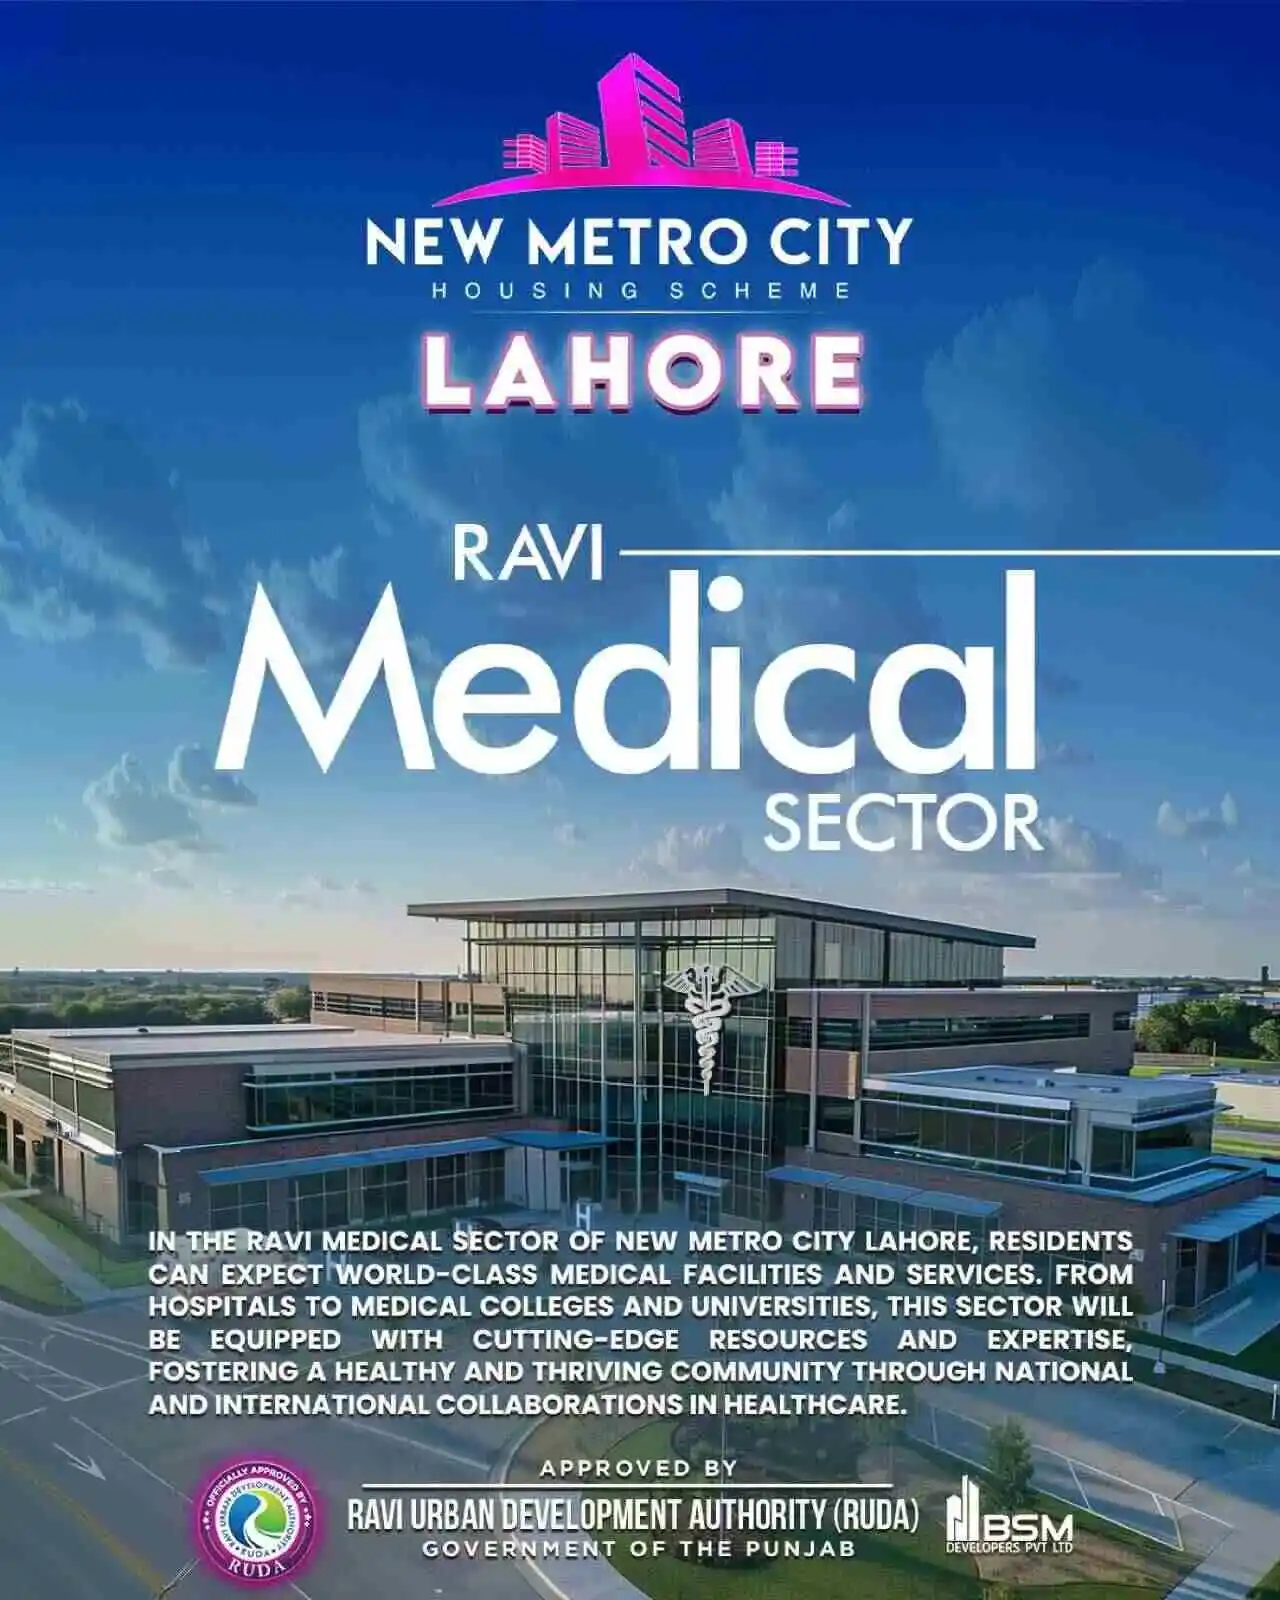 New Metro City Lahore Ravi Medical Sector